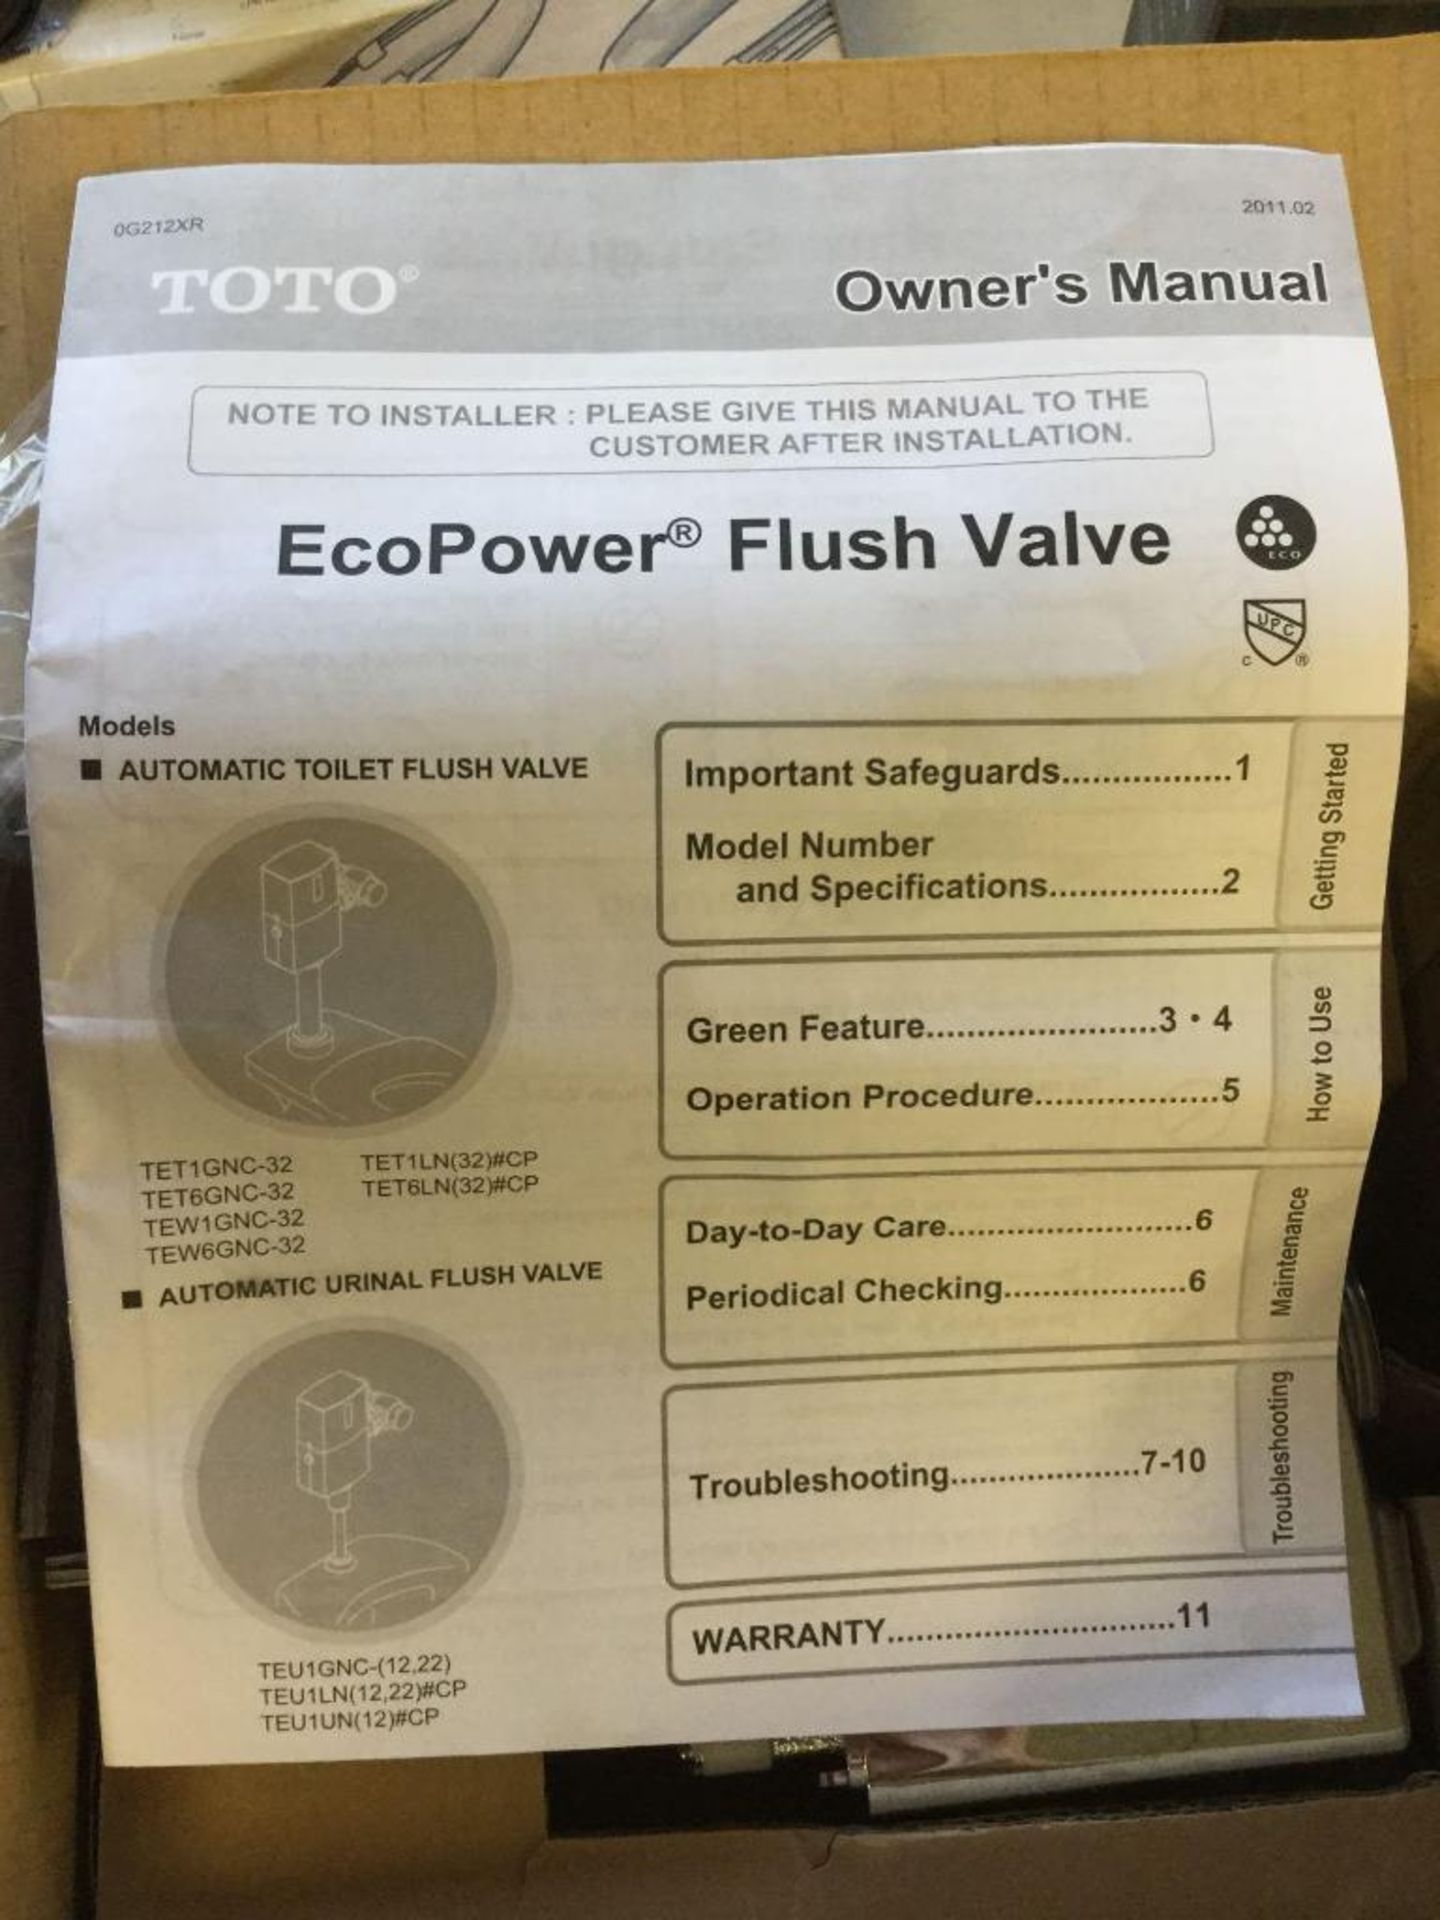 TOTO Ecopower Flush Valve - Automatic Urinal Flush Valve - Image 2 of 2